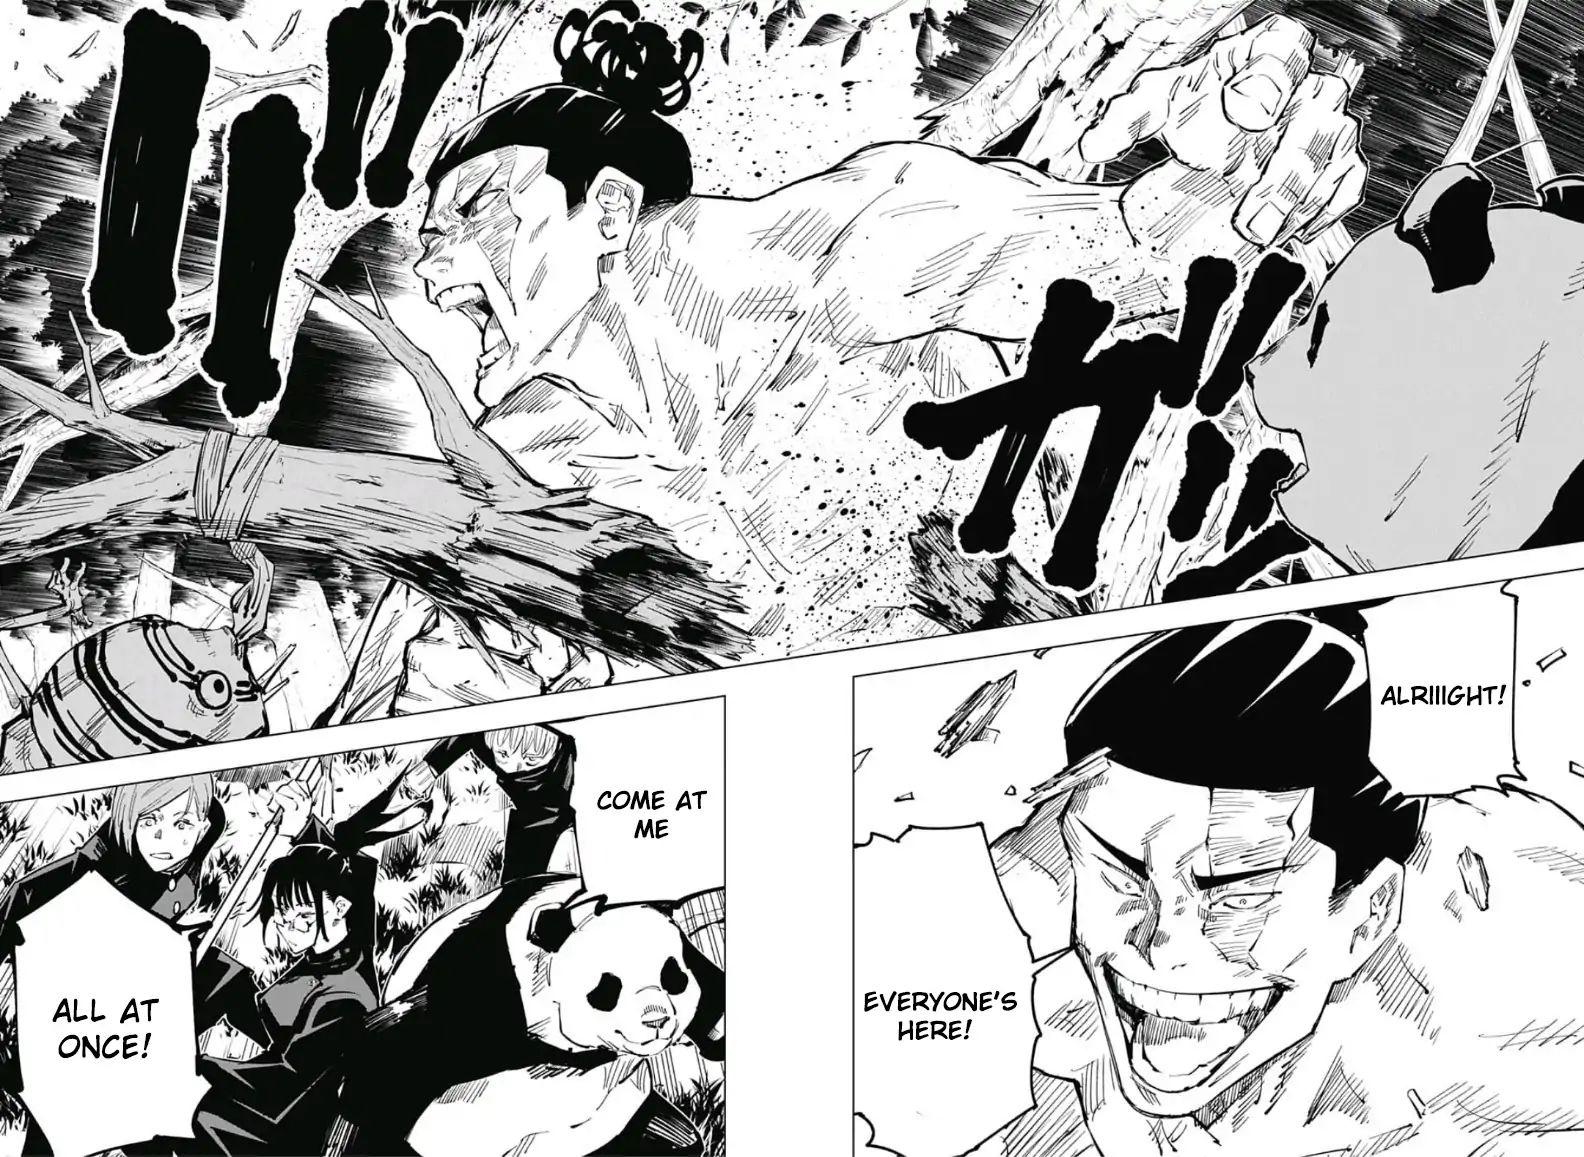 Jujutsu Kaisen Chapter 34: Exchange Festival With The Kyoto School - Team Battle 1 page 6 - Mangakakalot